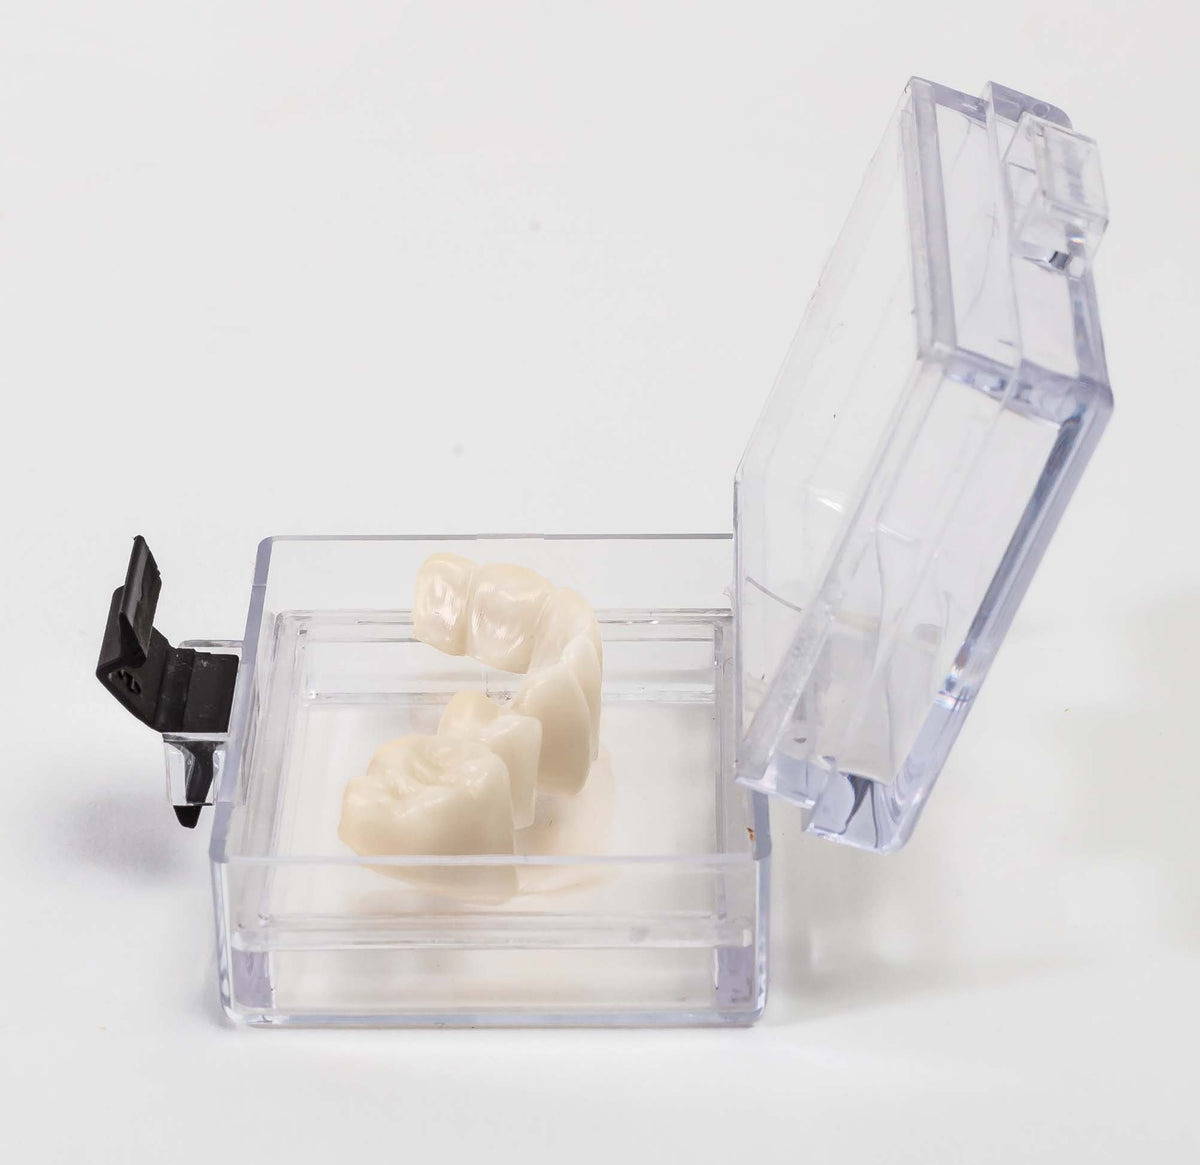 V6 Foam Filler (Tiger's Plastics), Dental Product